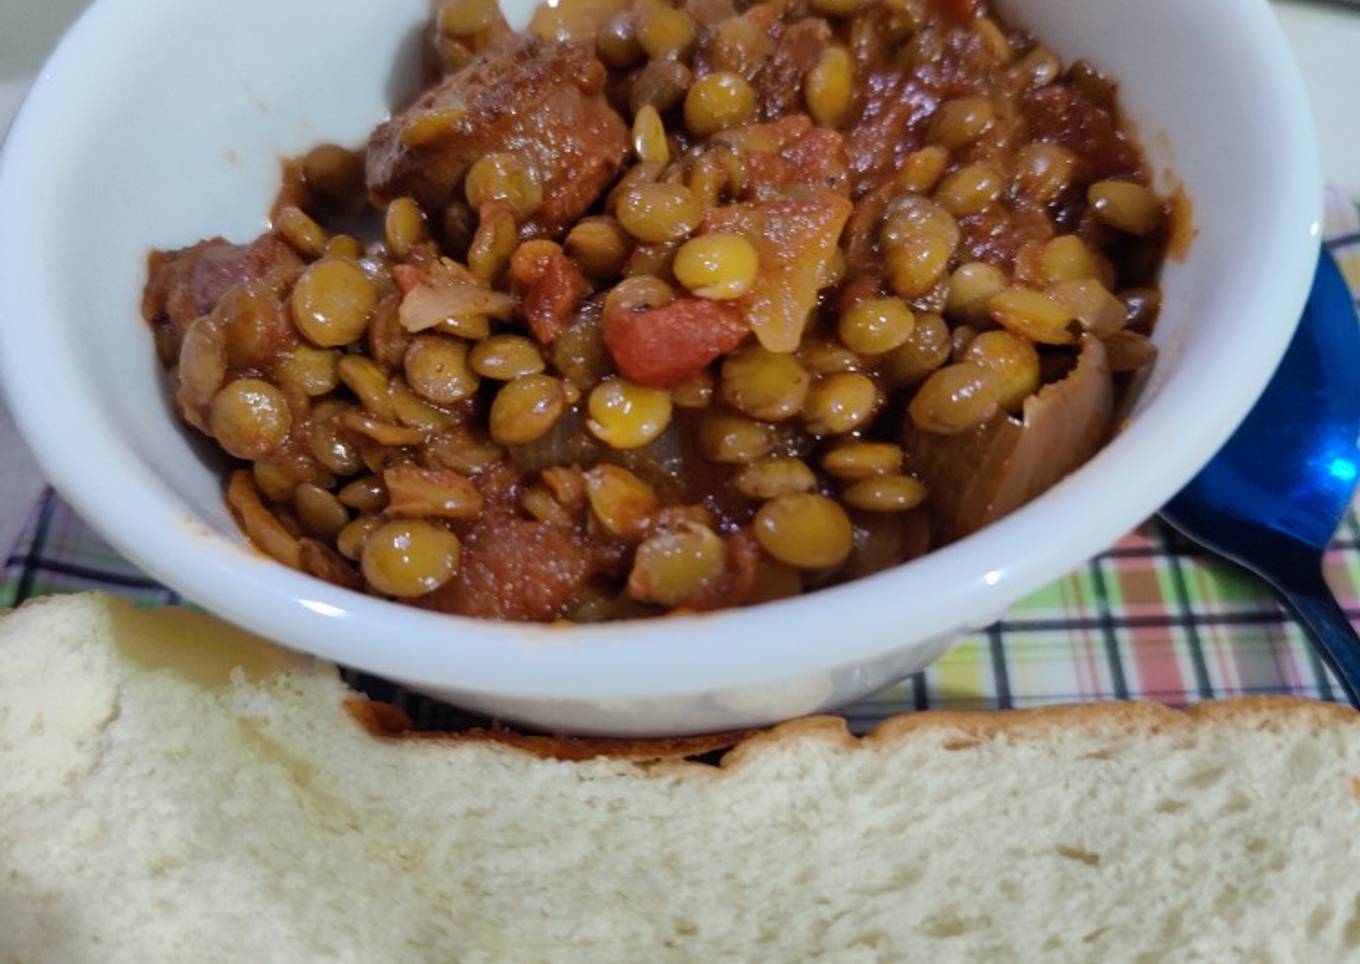 Chorizo and Lentil Stew